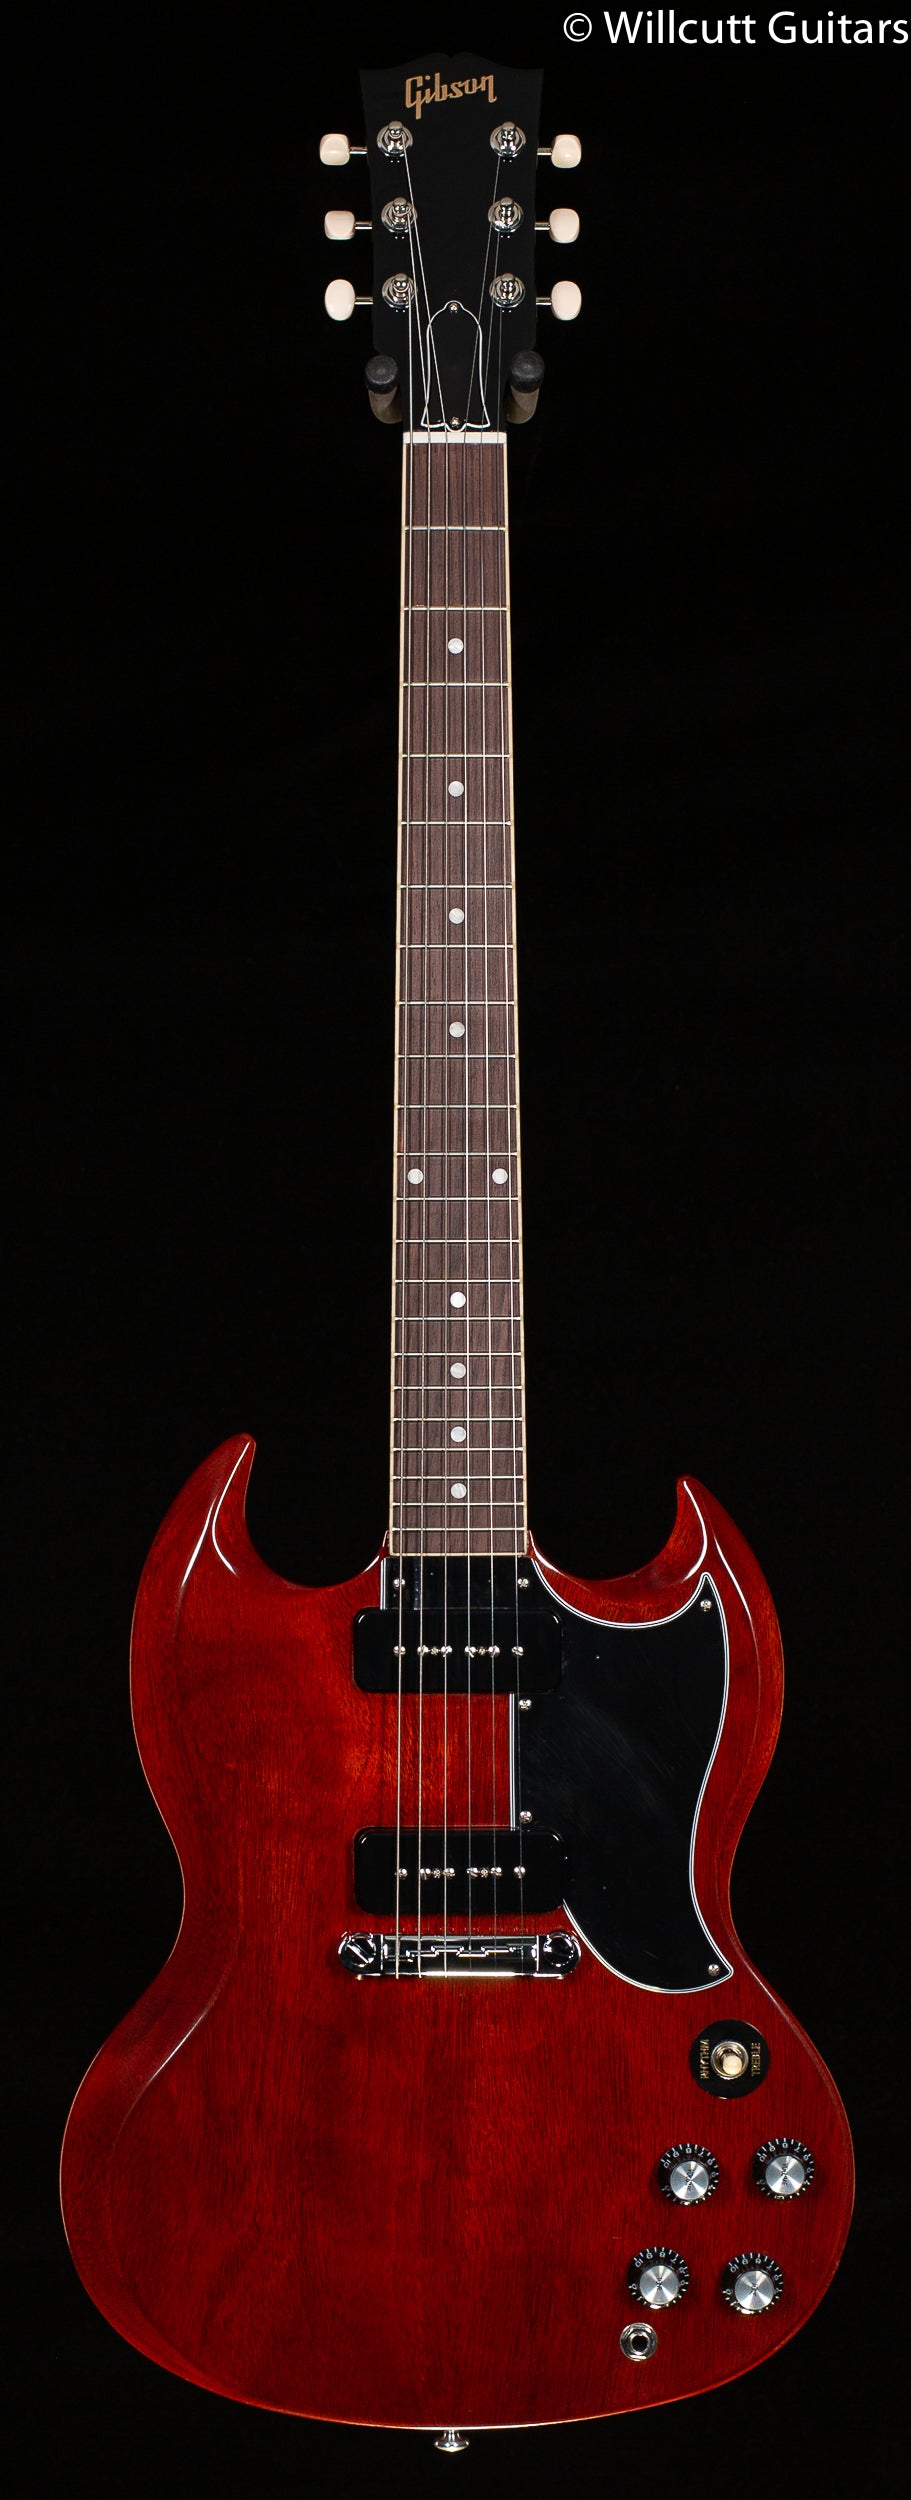 Gibson SG Special Vintage Cherry - Willcutt Guitars